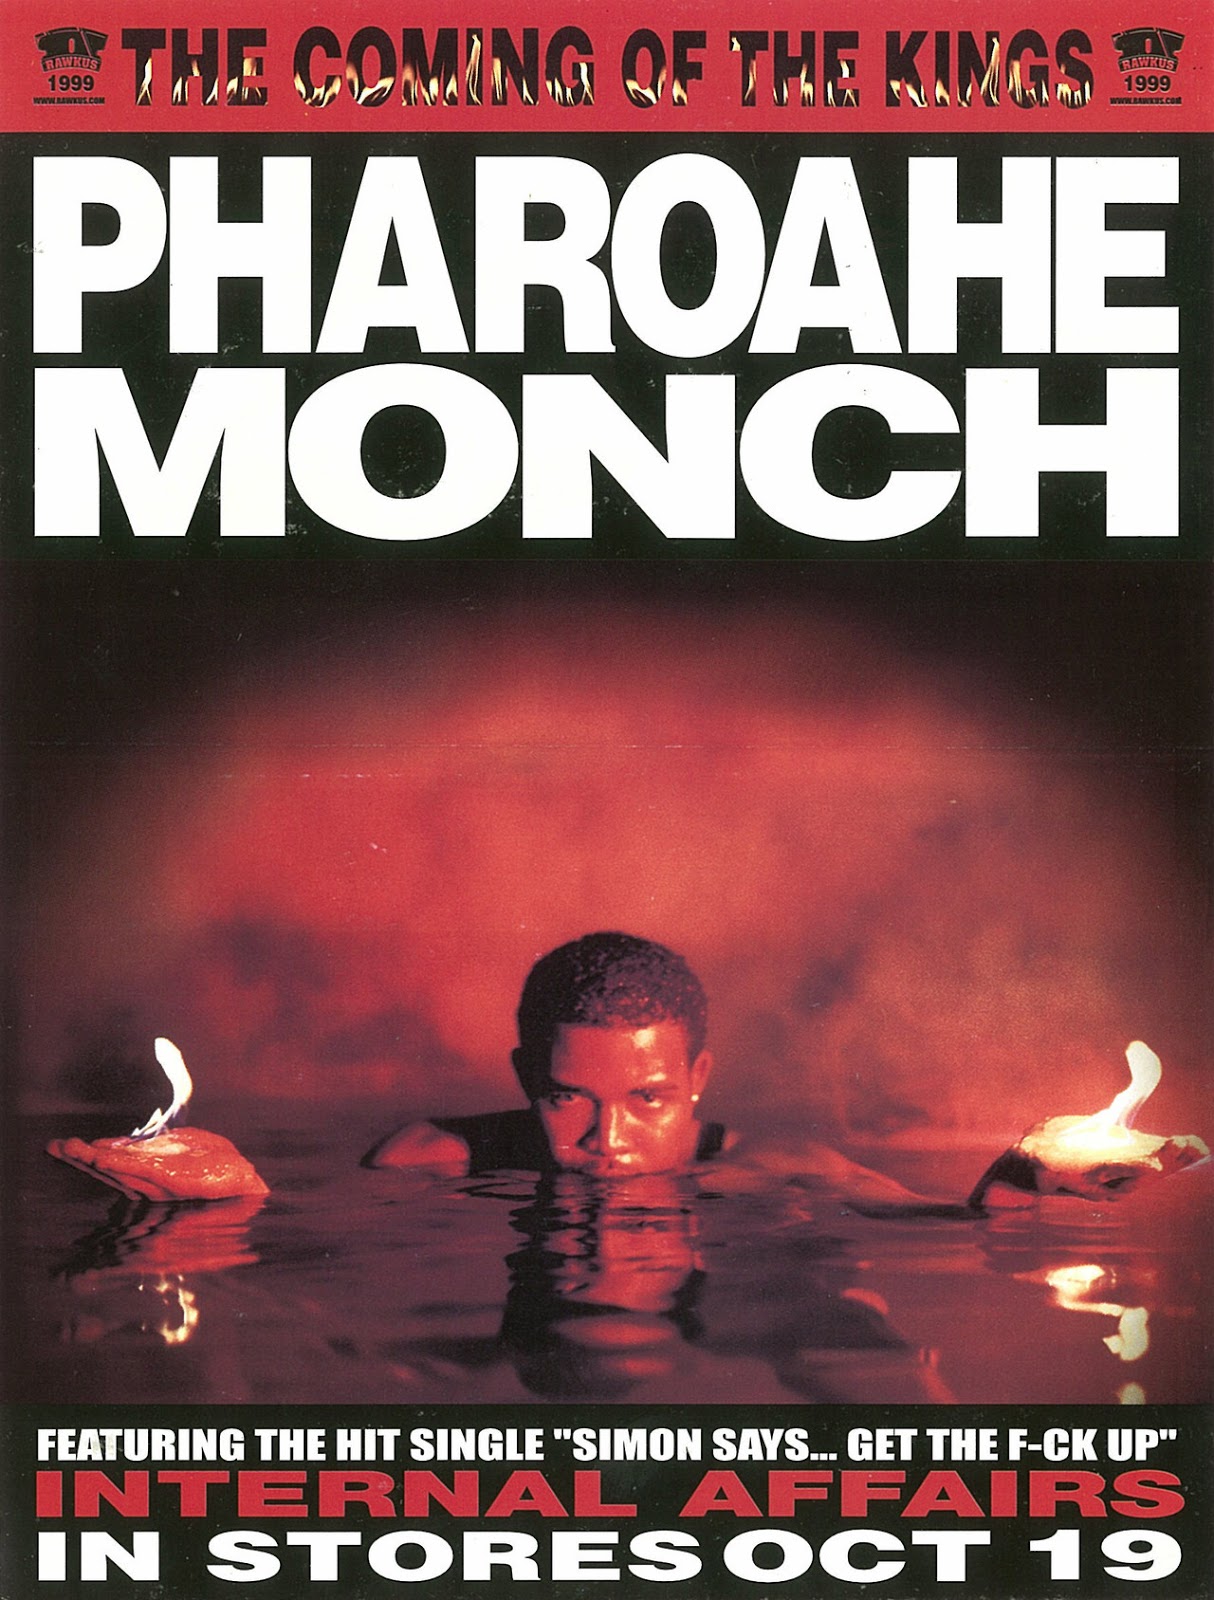 PHAROAHE MONCH - SIMON SAYS / BEHIND CLOSED DOORS - CD SINGLE RAWKUS